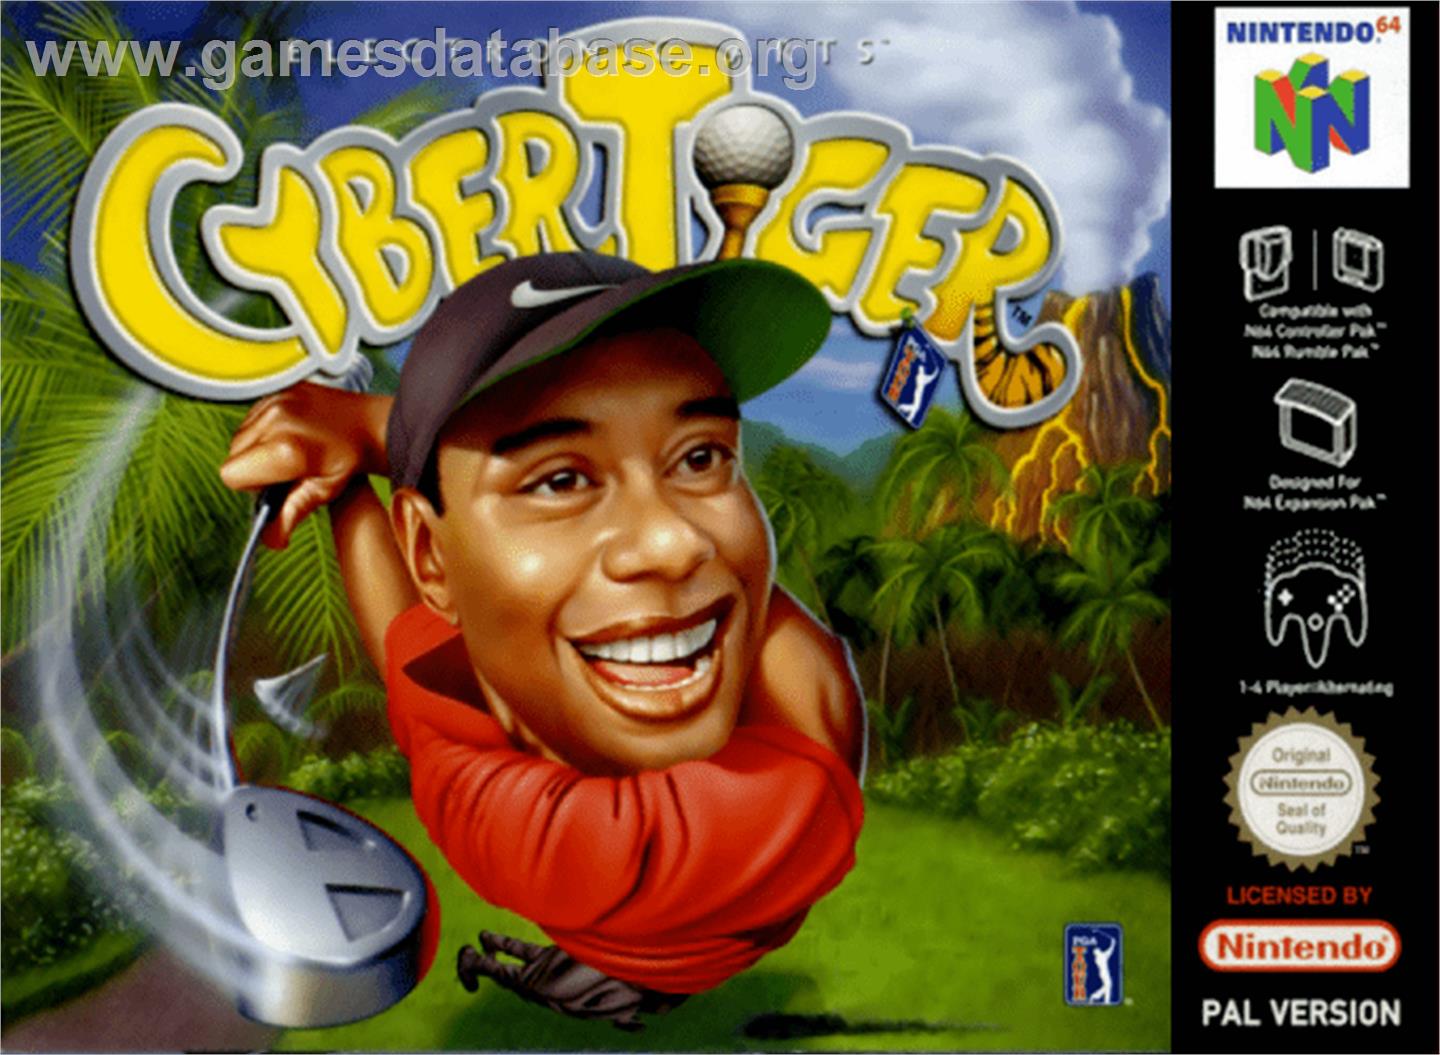 Cyber Tiger - Nintendo N64 - Artwork - Box